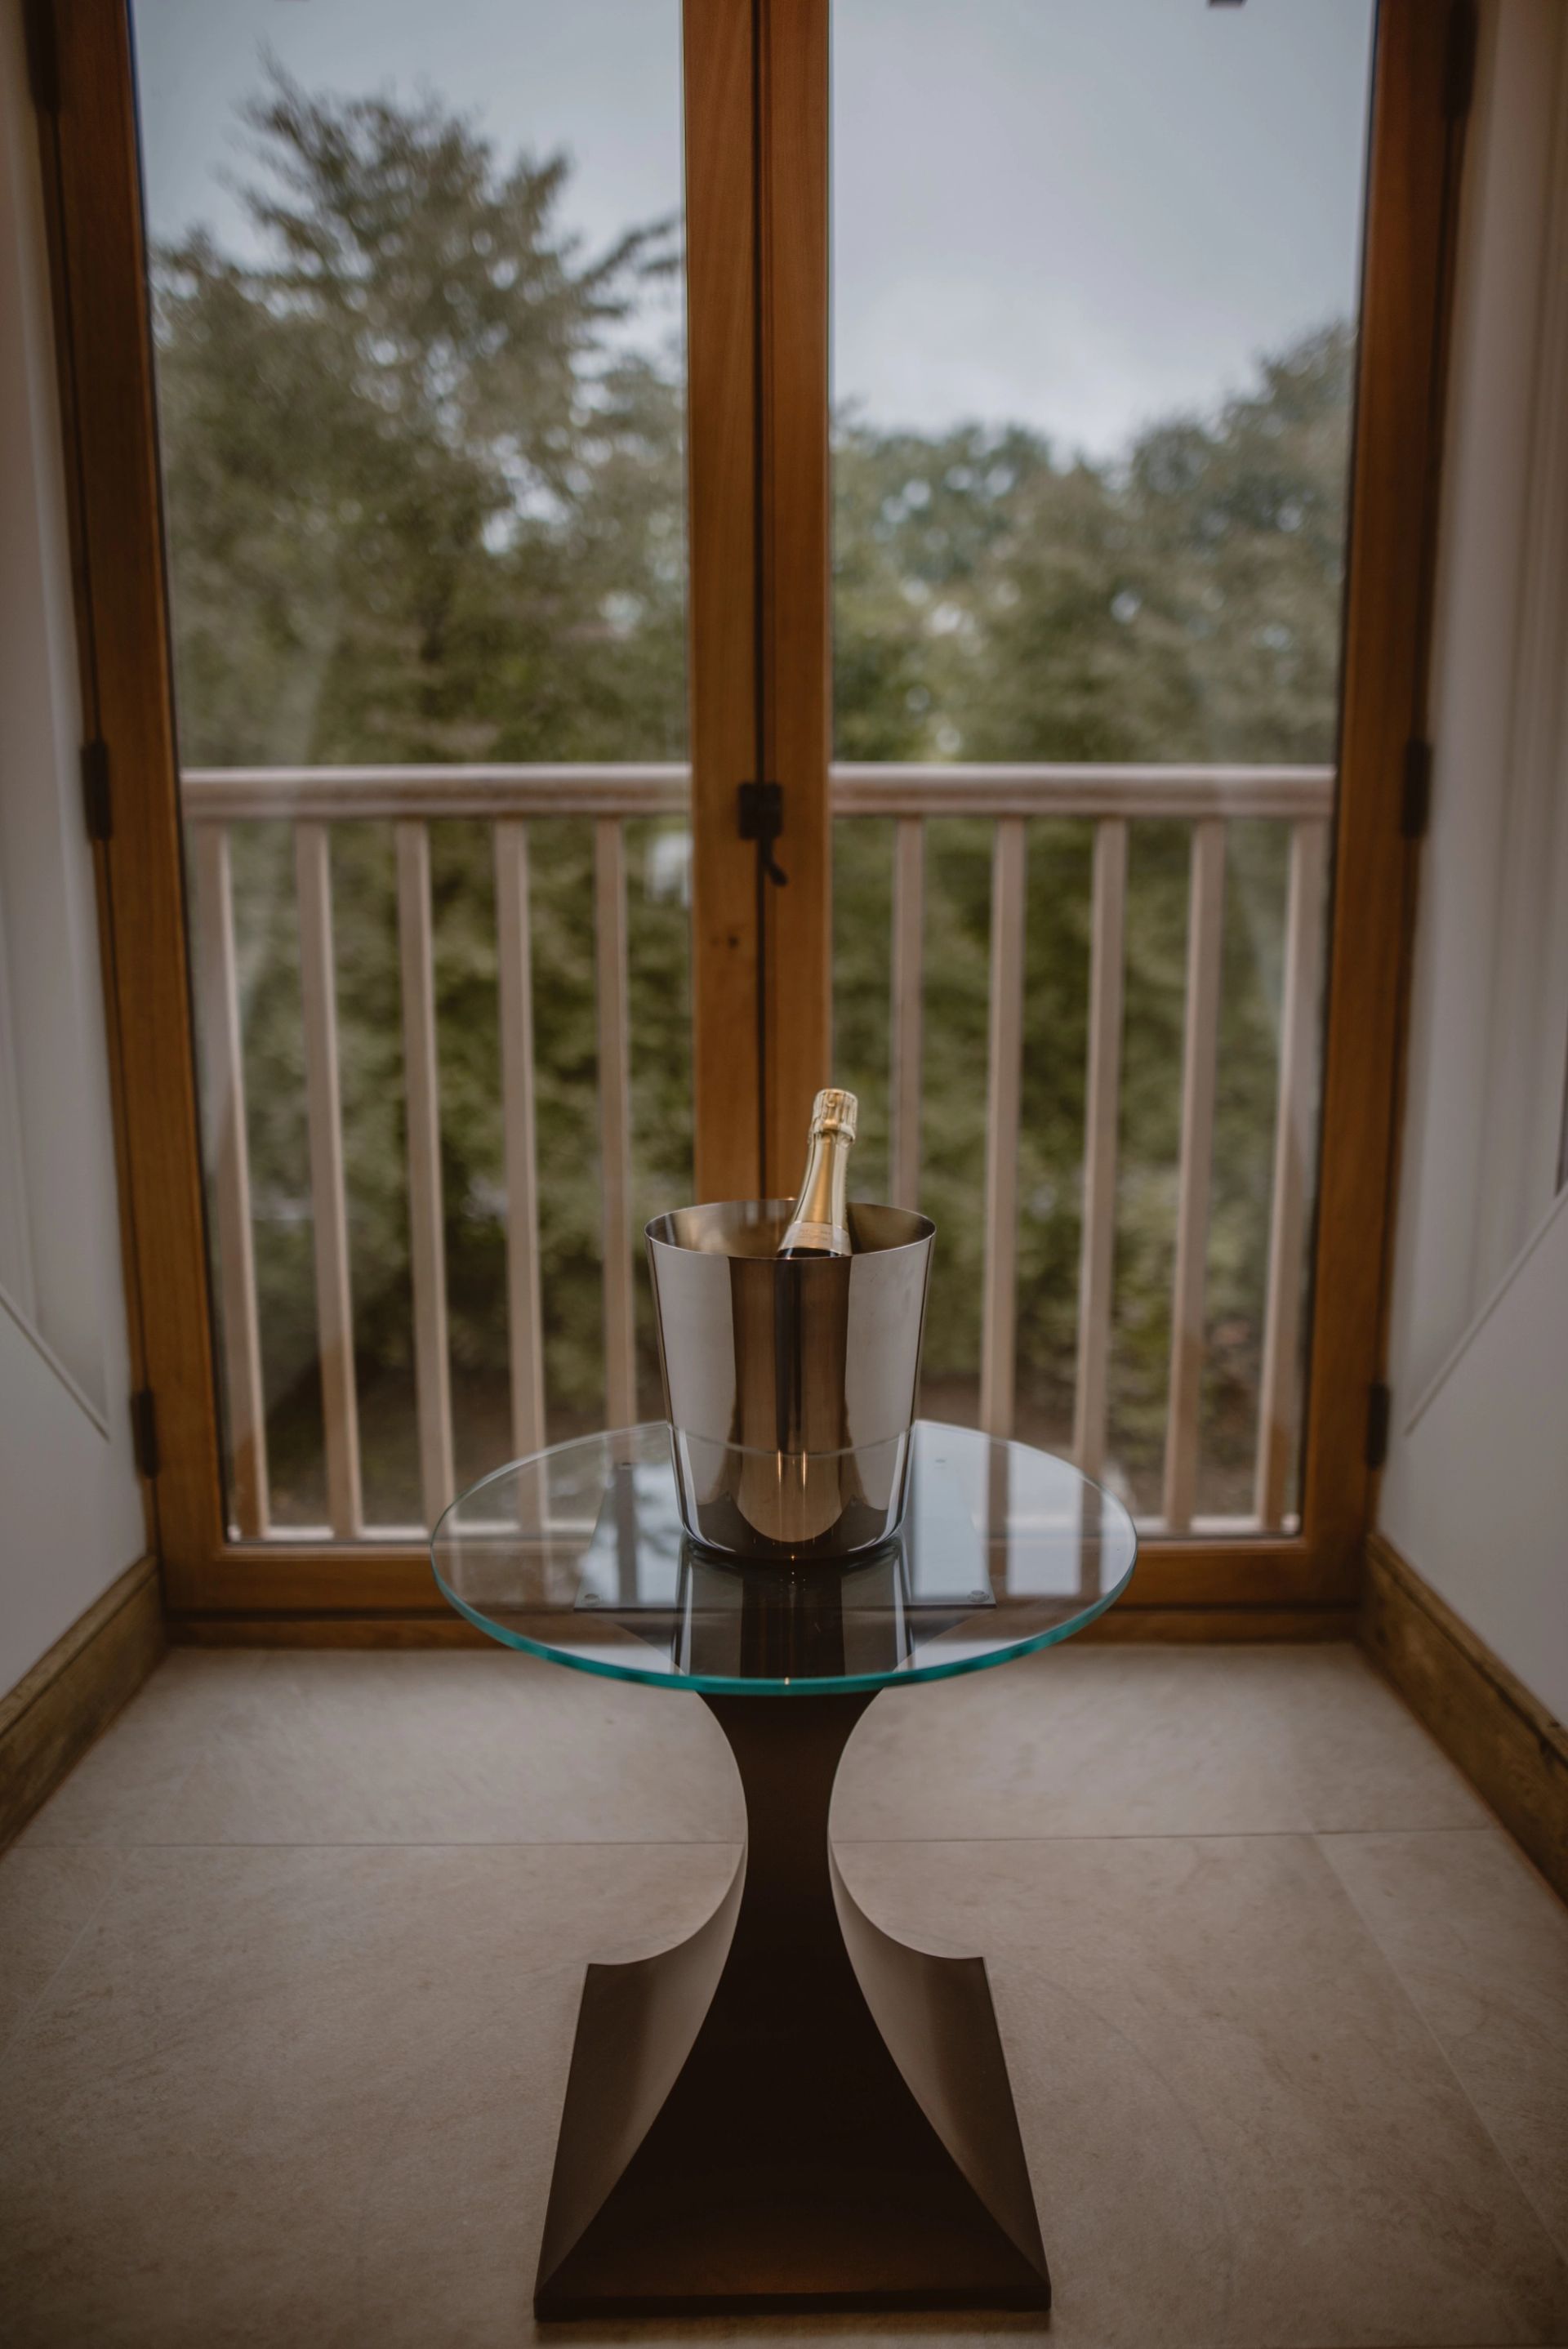 Glass table with wine bucket and balcony doors